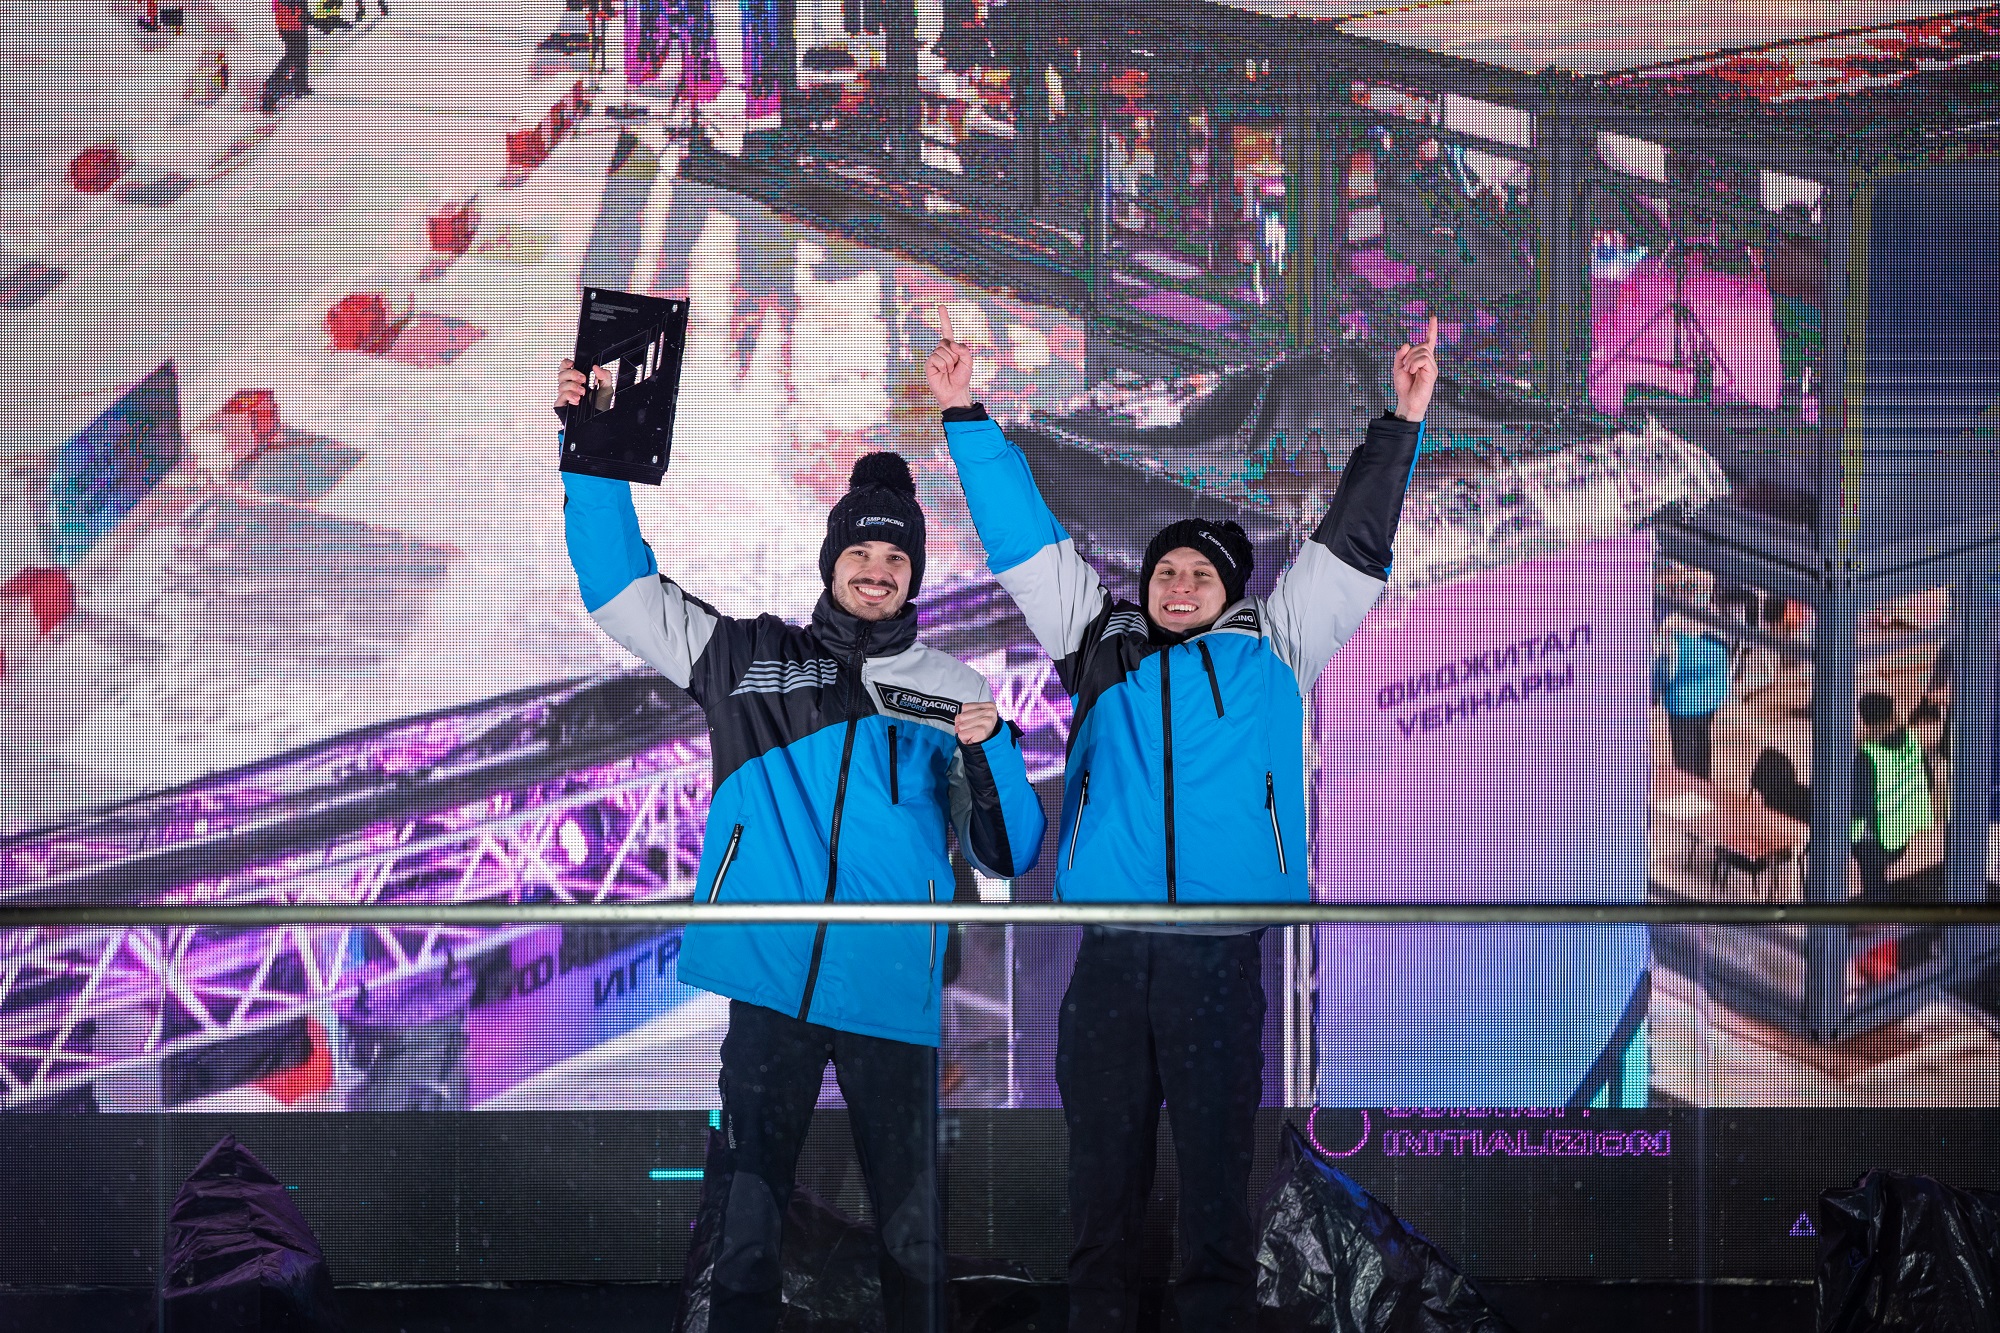 Aleksandr Smolyar & Dmitry Arsentyev – winners of the phygital ice racing!